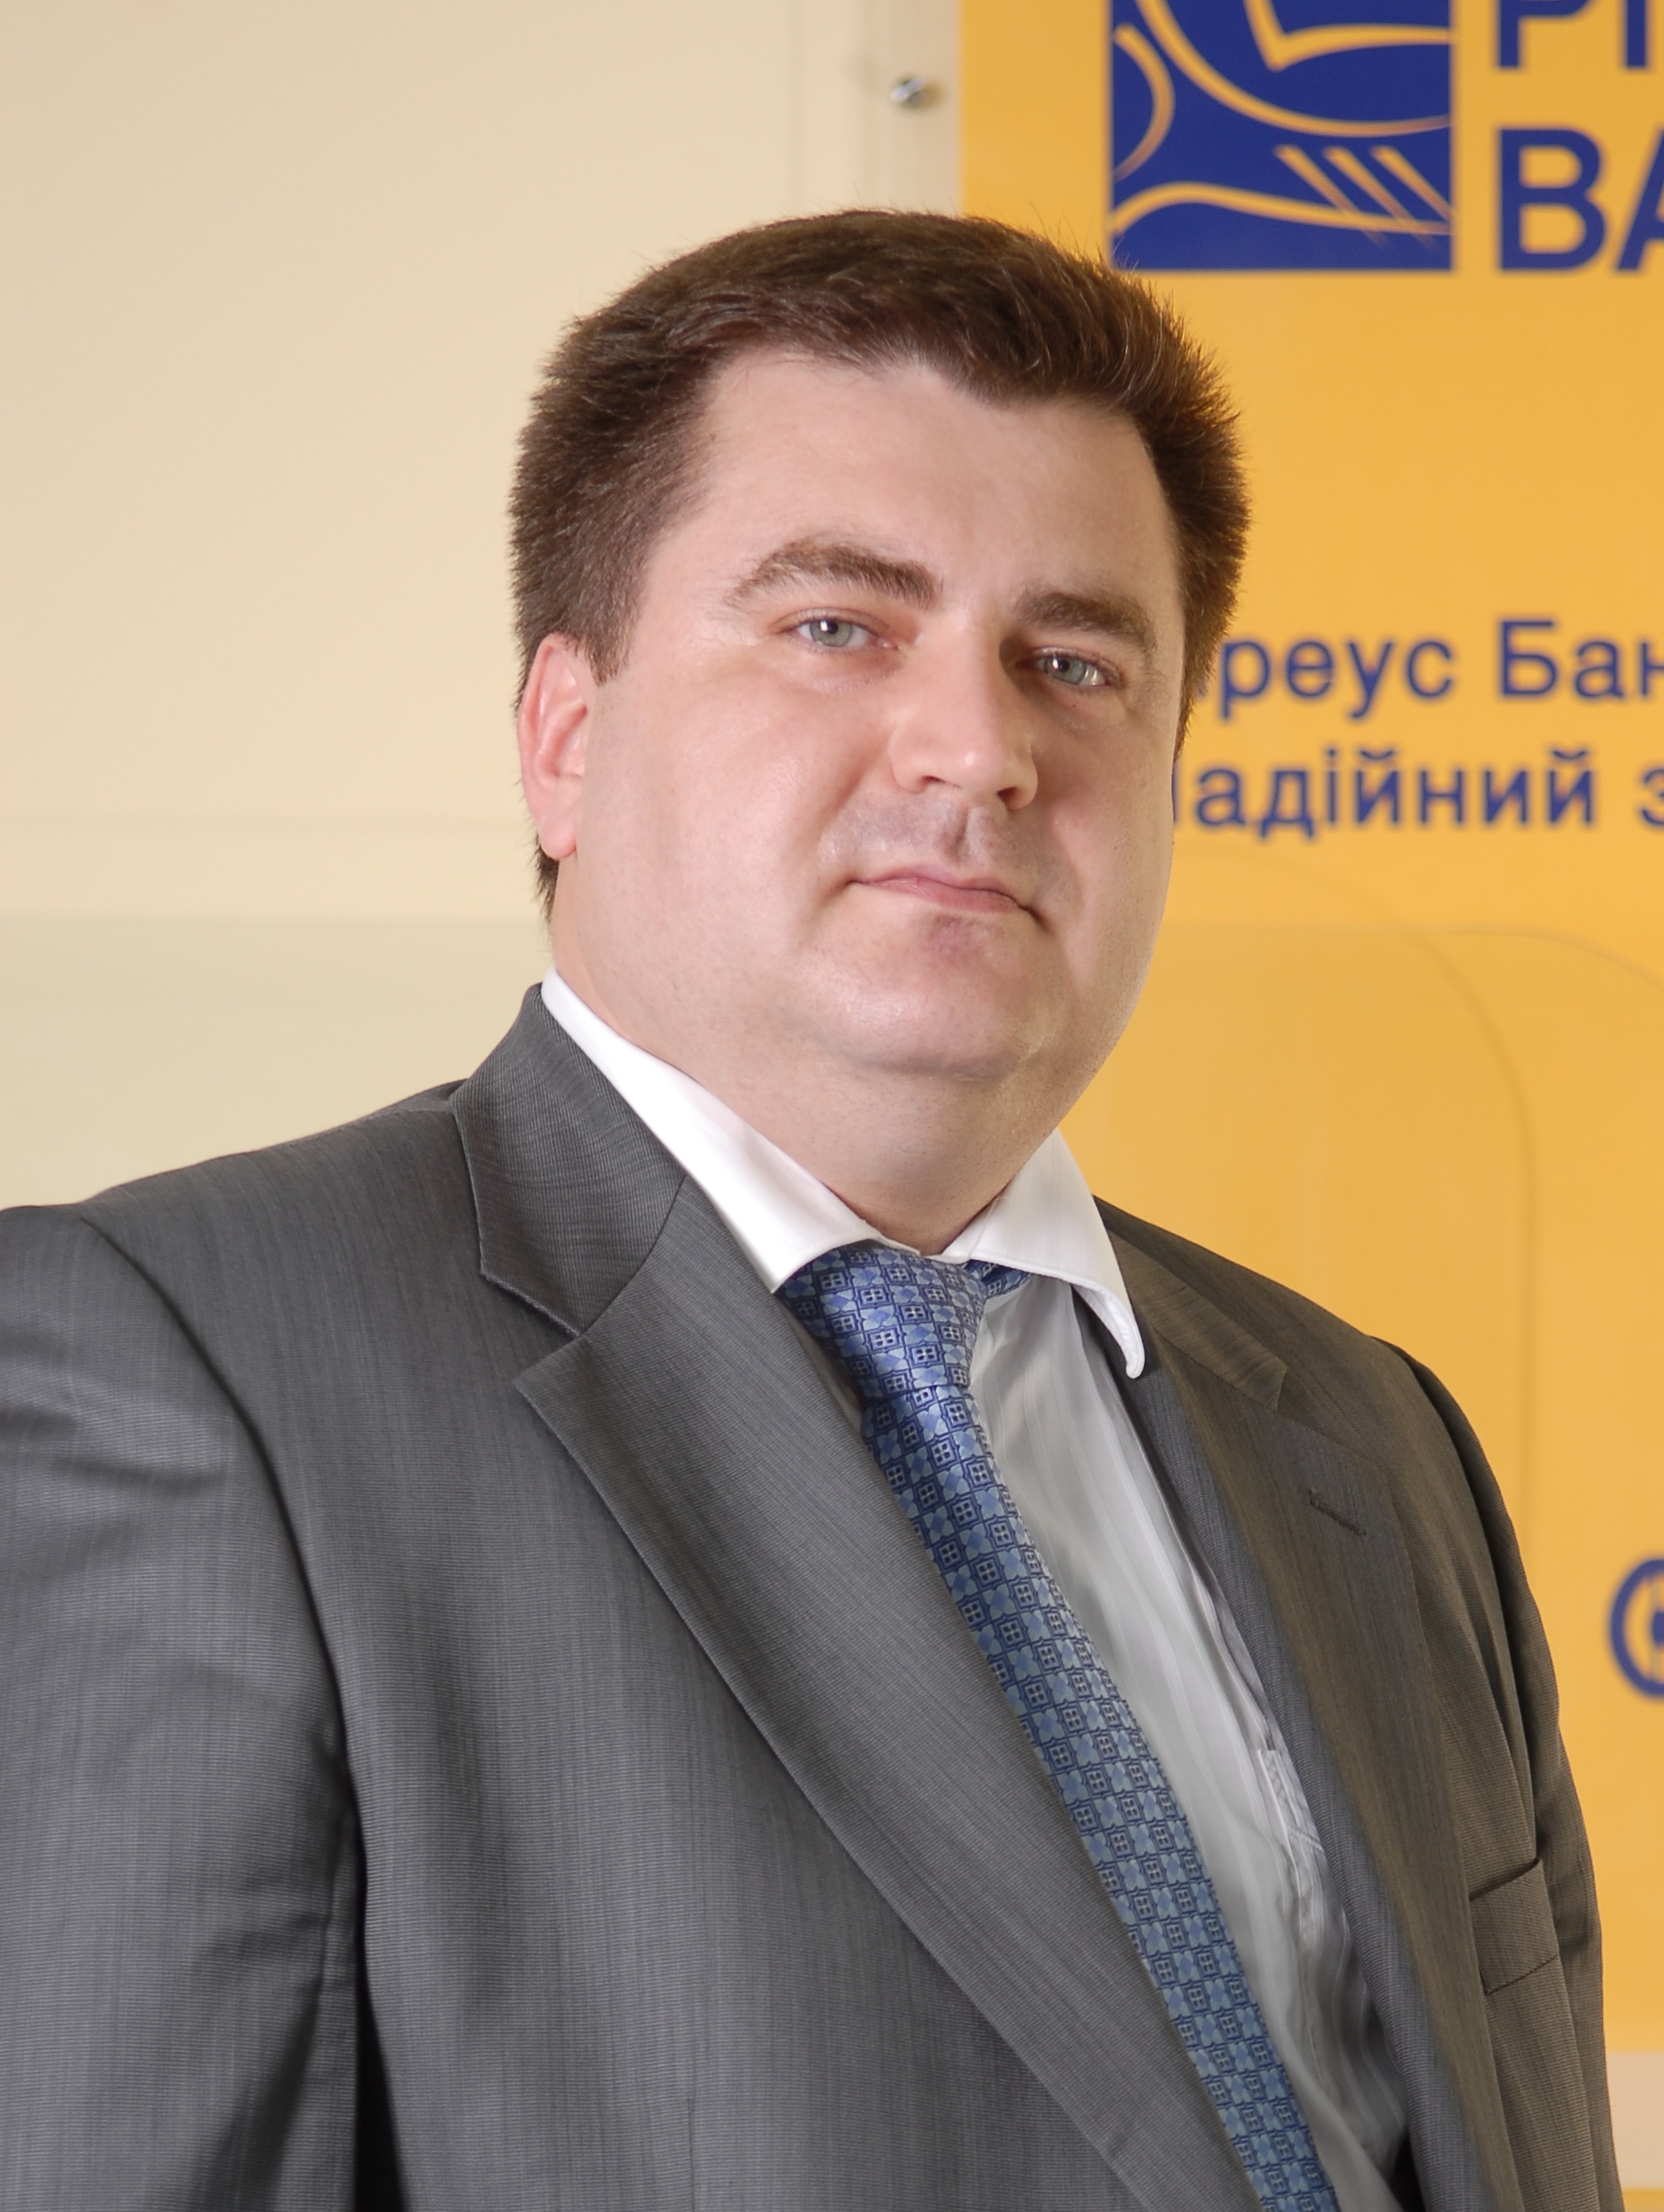 Dmytro Musiyenko, Piraeus Bank in Ukraine board member and director of the branch network department: 